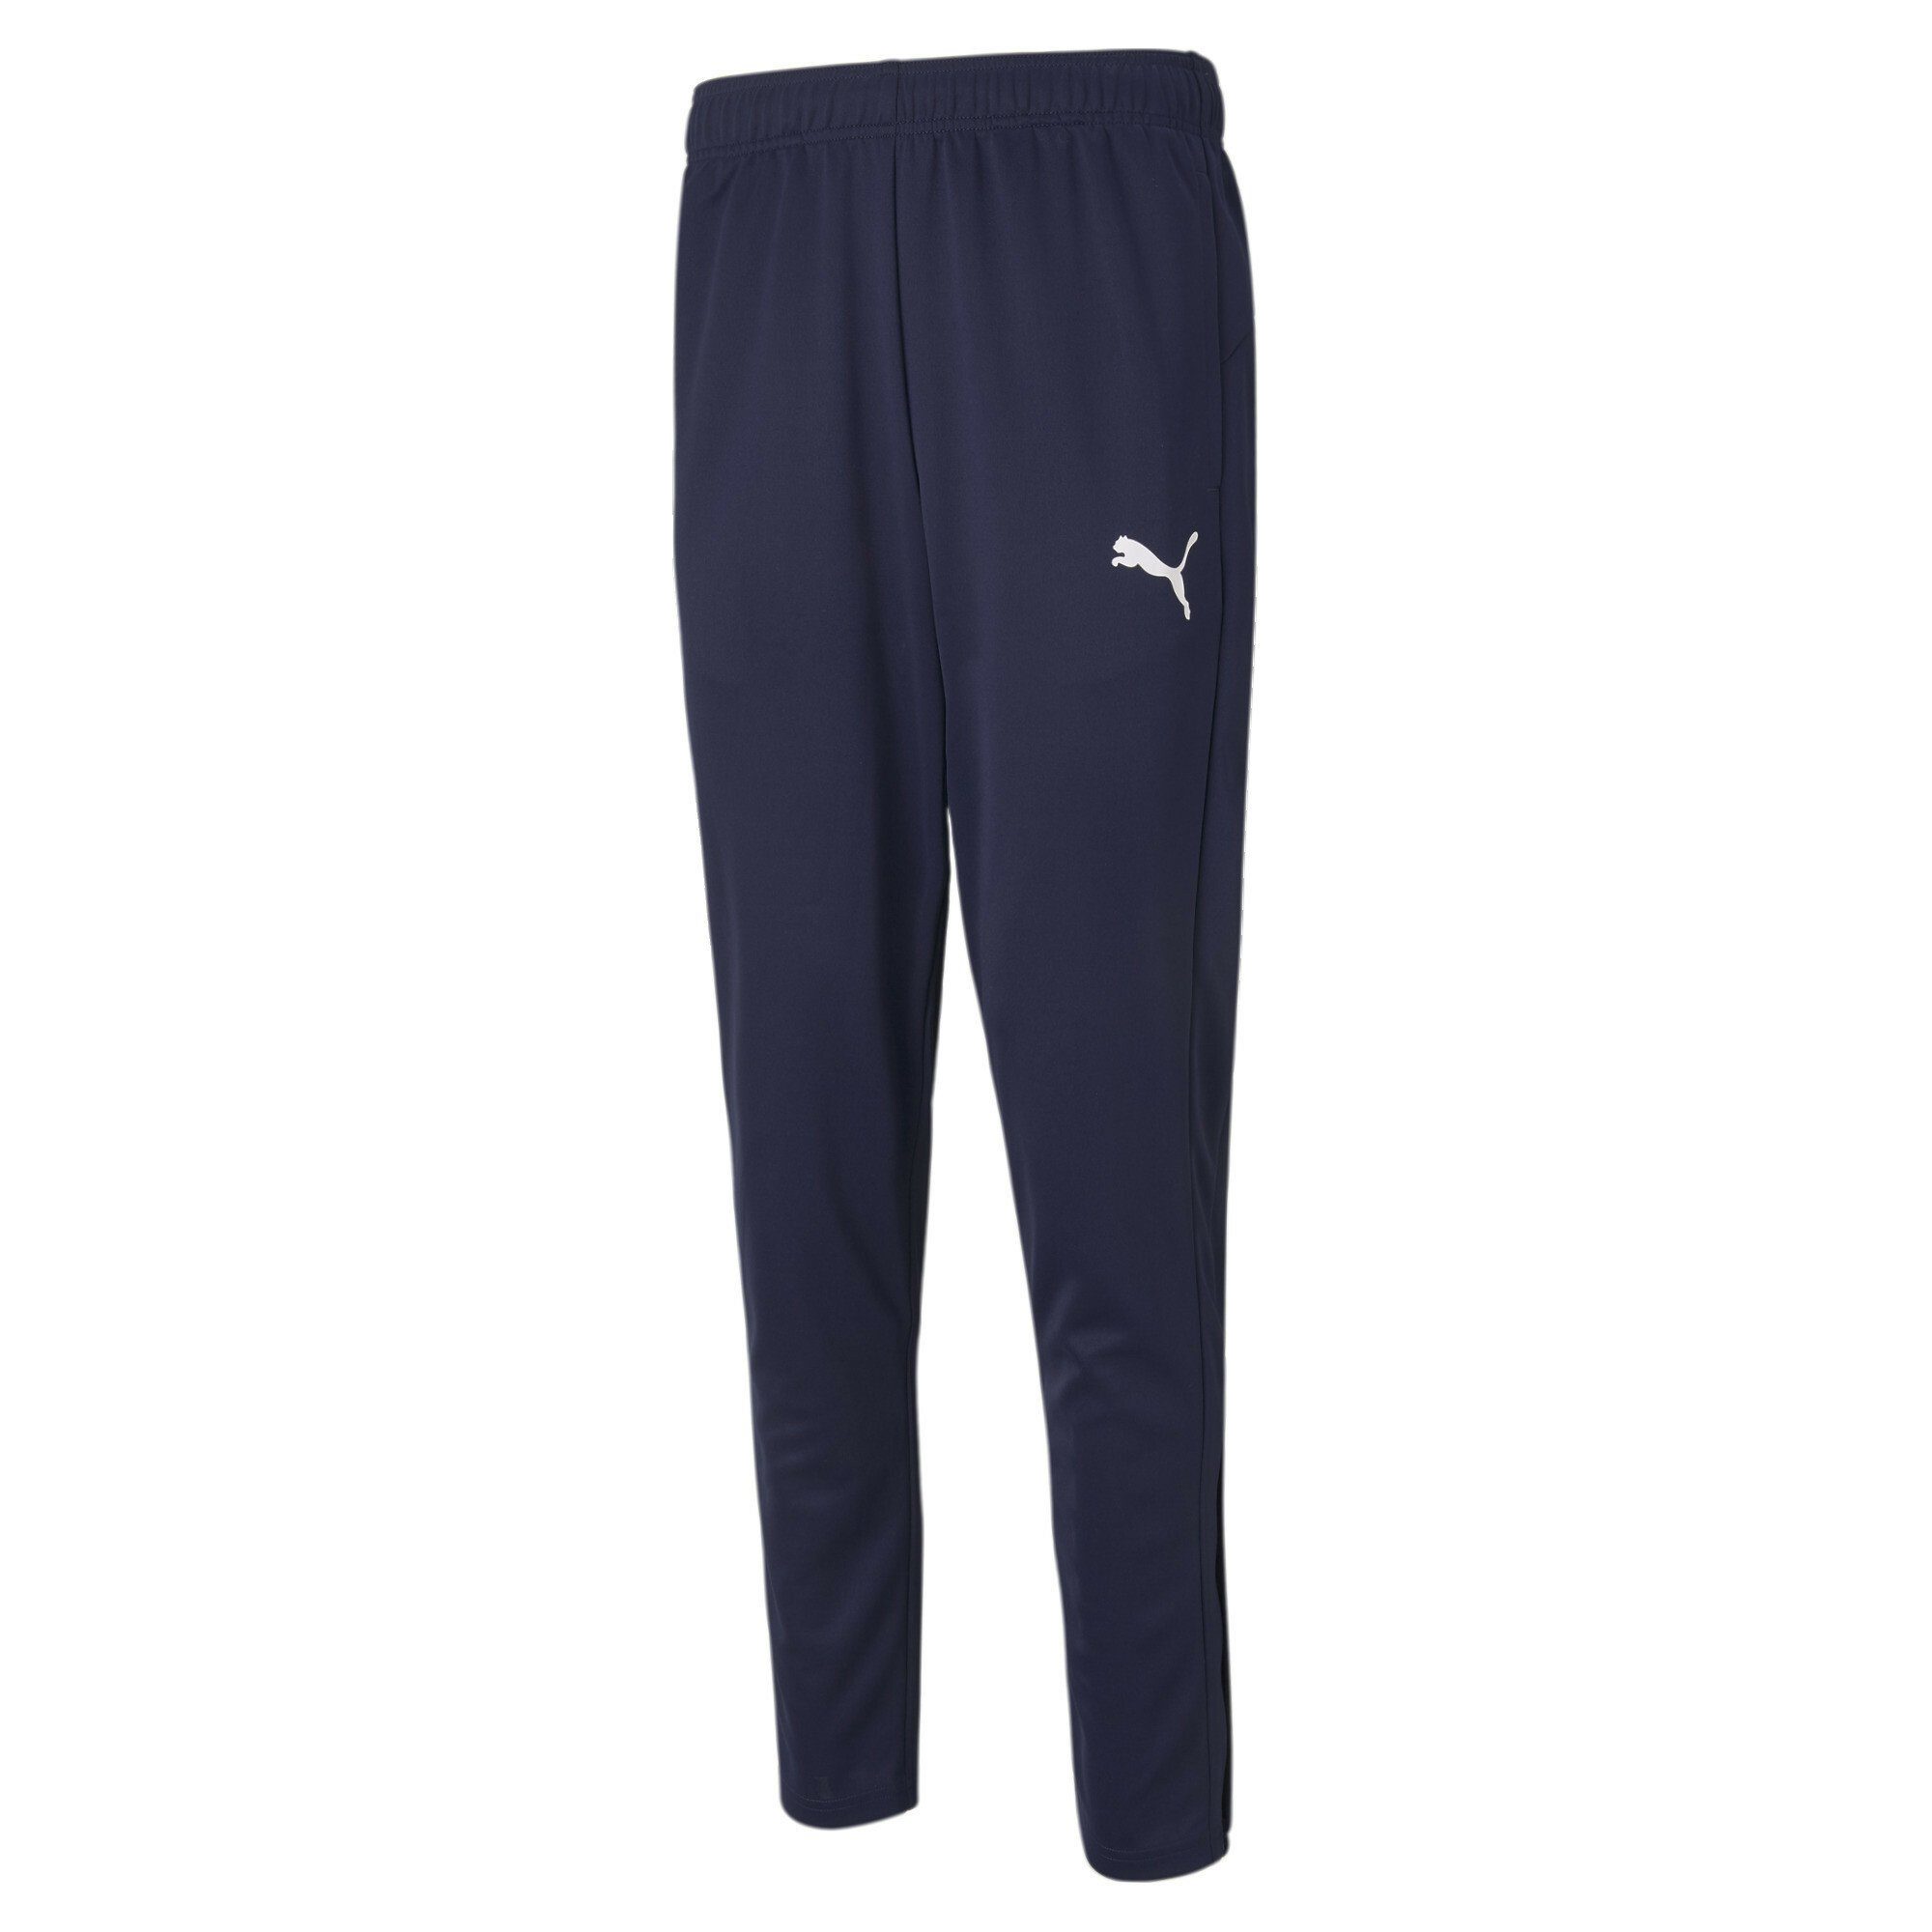 PUMA Jogginghose »Active Tricot Herren Sweatpants Slim« online kaufen | OTTO